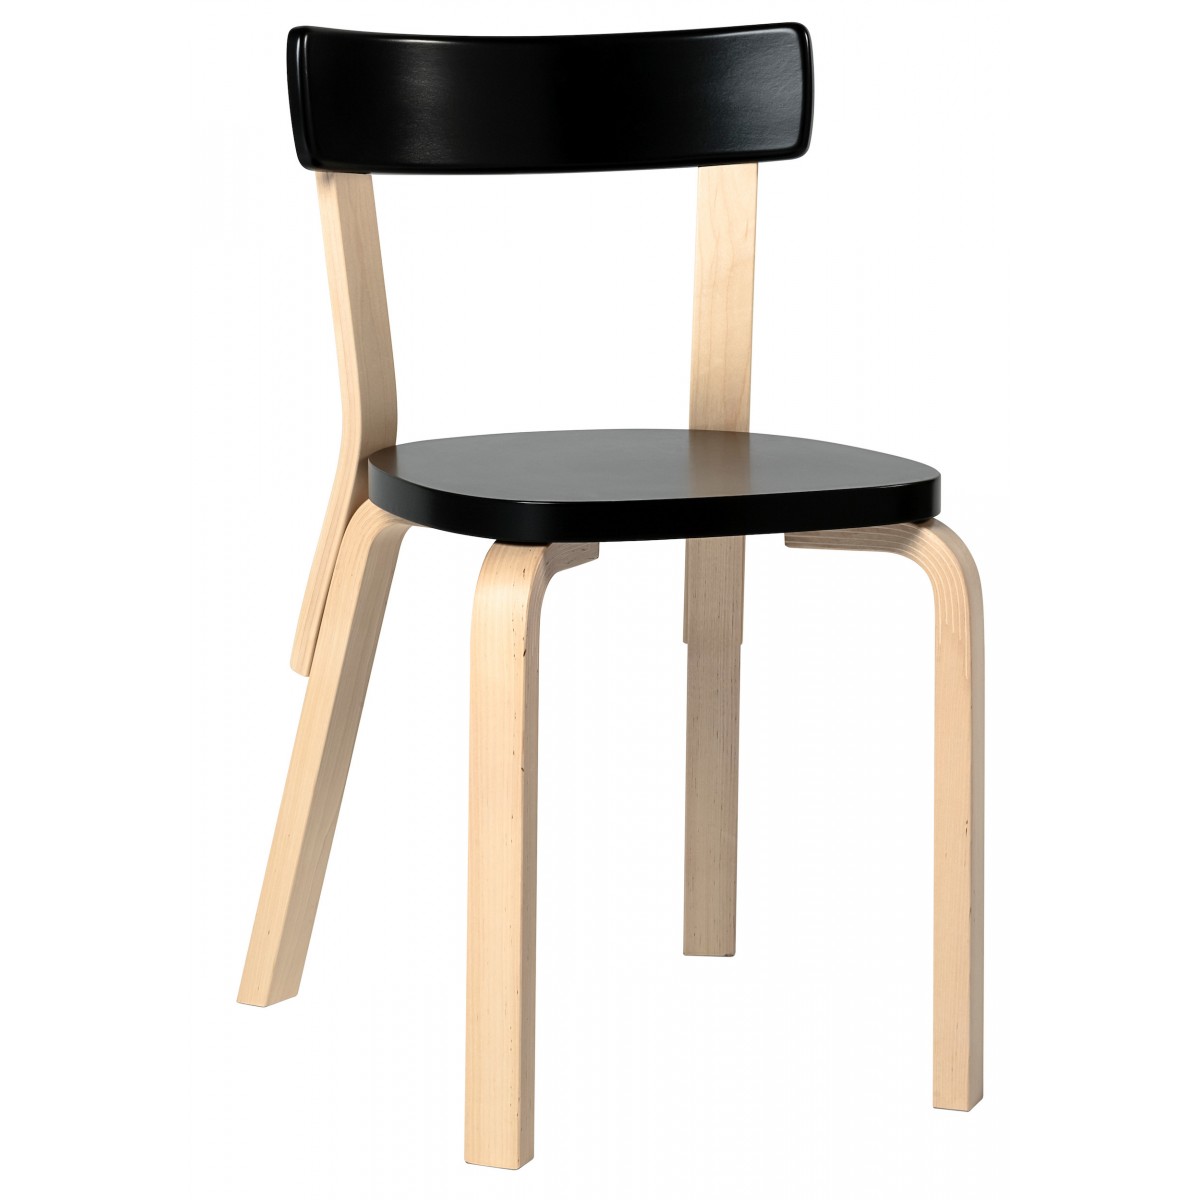 black + birch - 69 chair